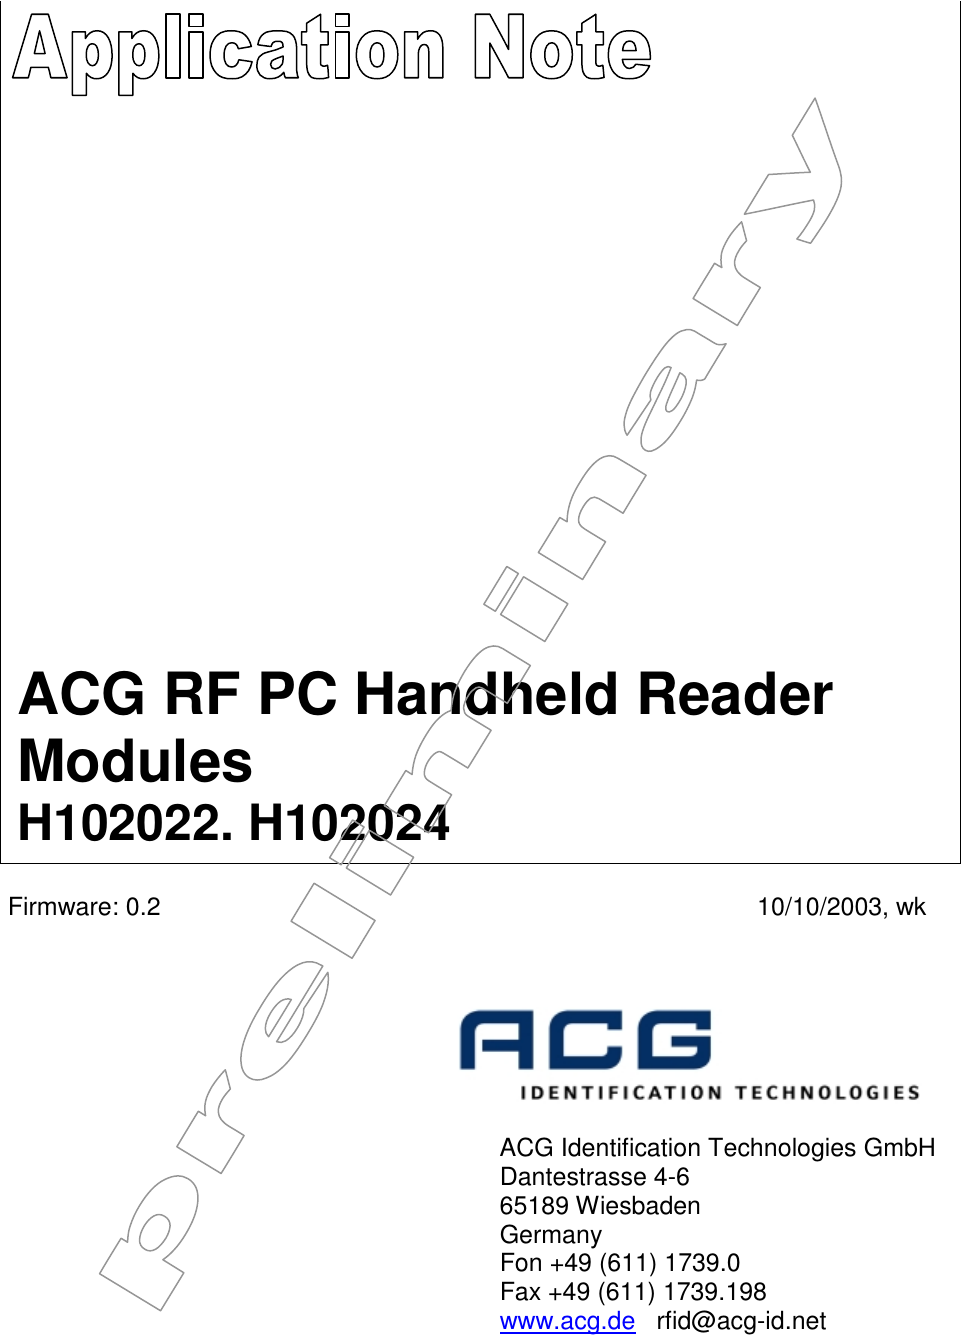                                 Firmware: 0.2  10/10/2003, wk                  ACG Identification Technologies GmbH       Dantestrasse 4-6       65189 Wiesbaden        Germany       Fon +49 (611) 1739.0       Fax +49 (611) 1739.198       www.acg.de   rfid@acg-id.net  ACG RF PC Handheld Reader Modules H102022. H102024 